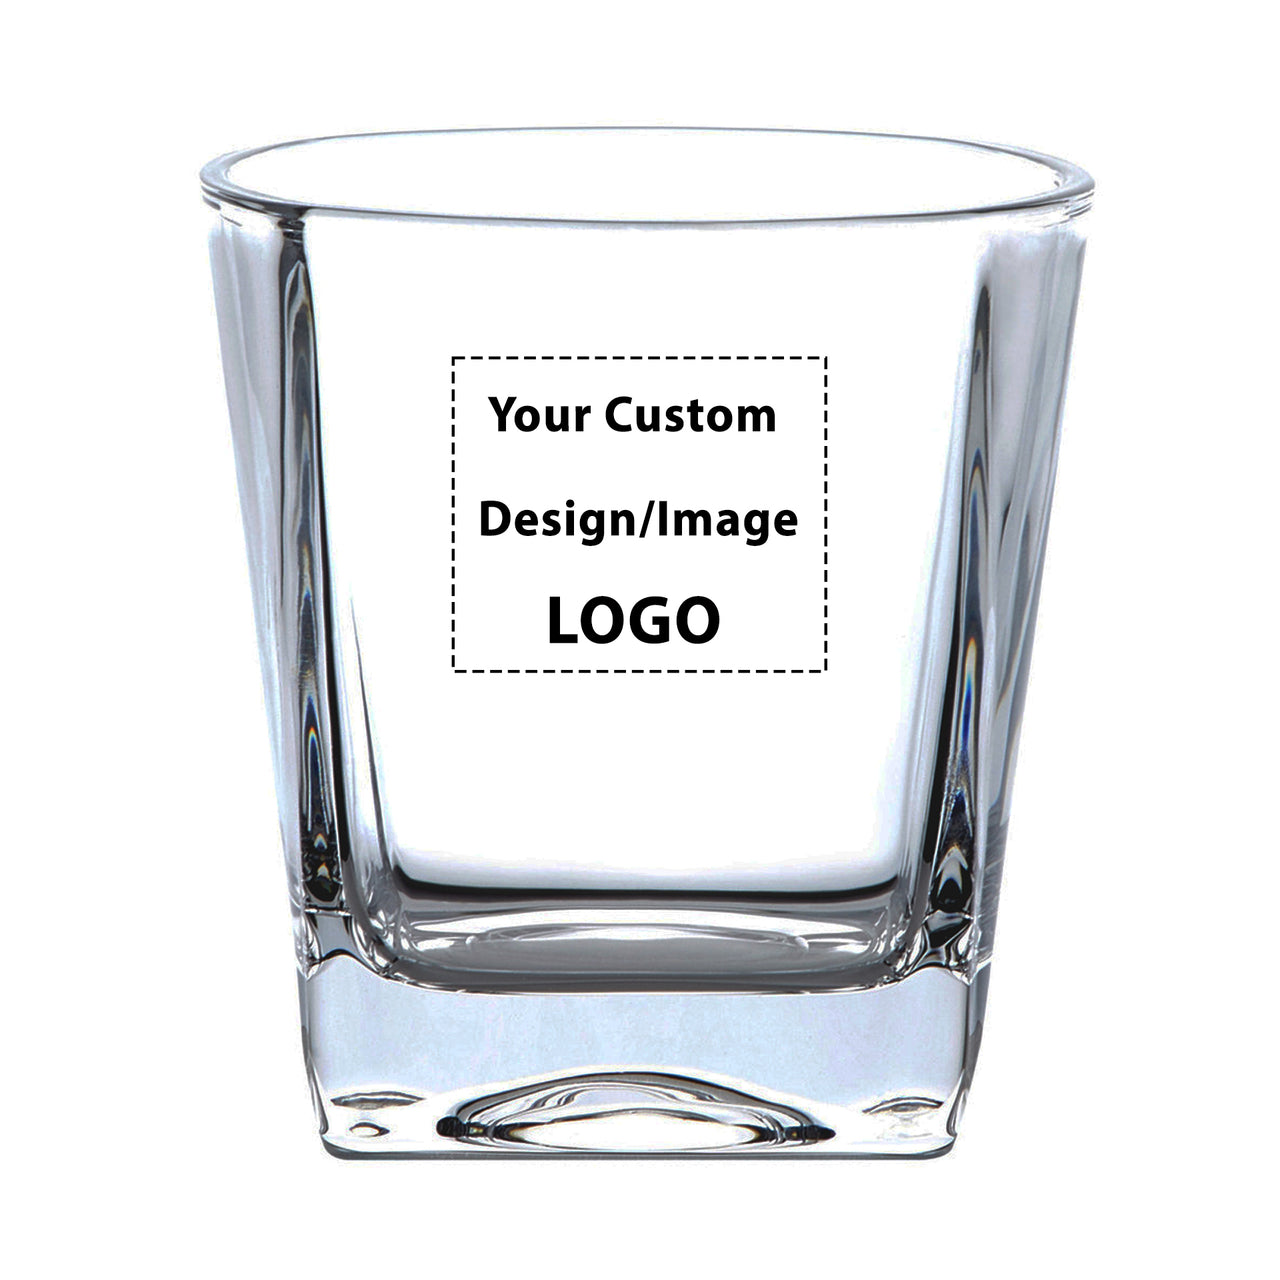 Your Custom Design/Image/Logo Designed Whiskey Glass